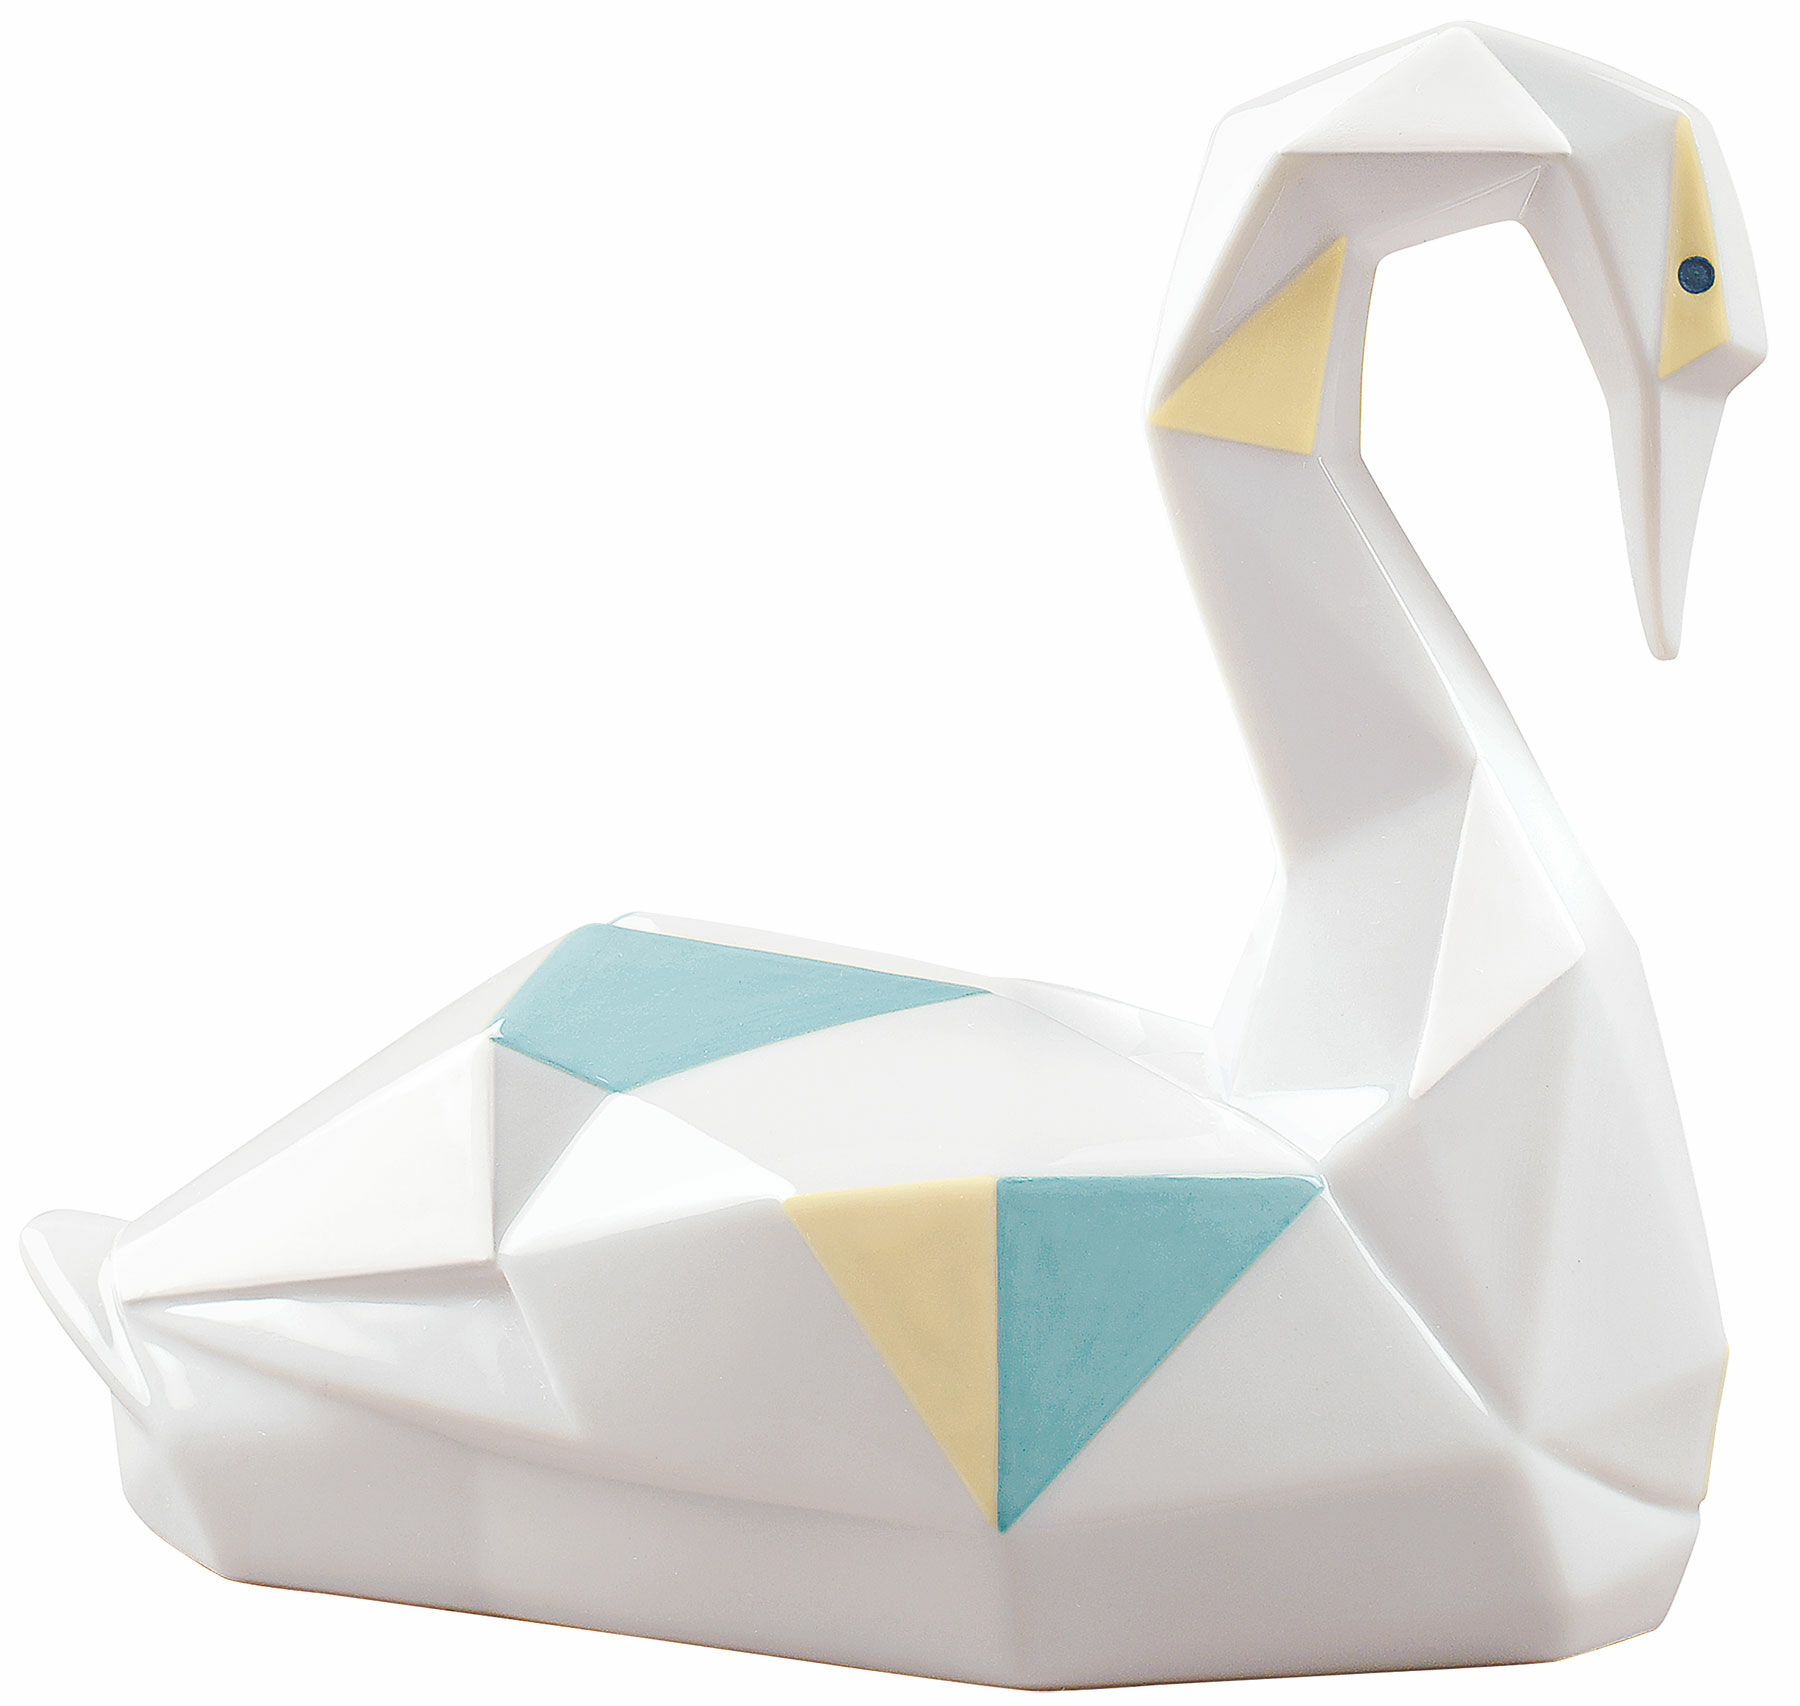 Porcelain figurine "Swan", coloured version by Lladró